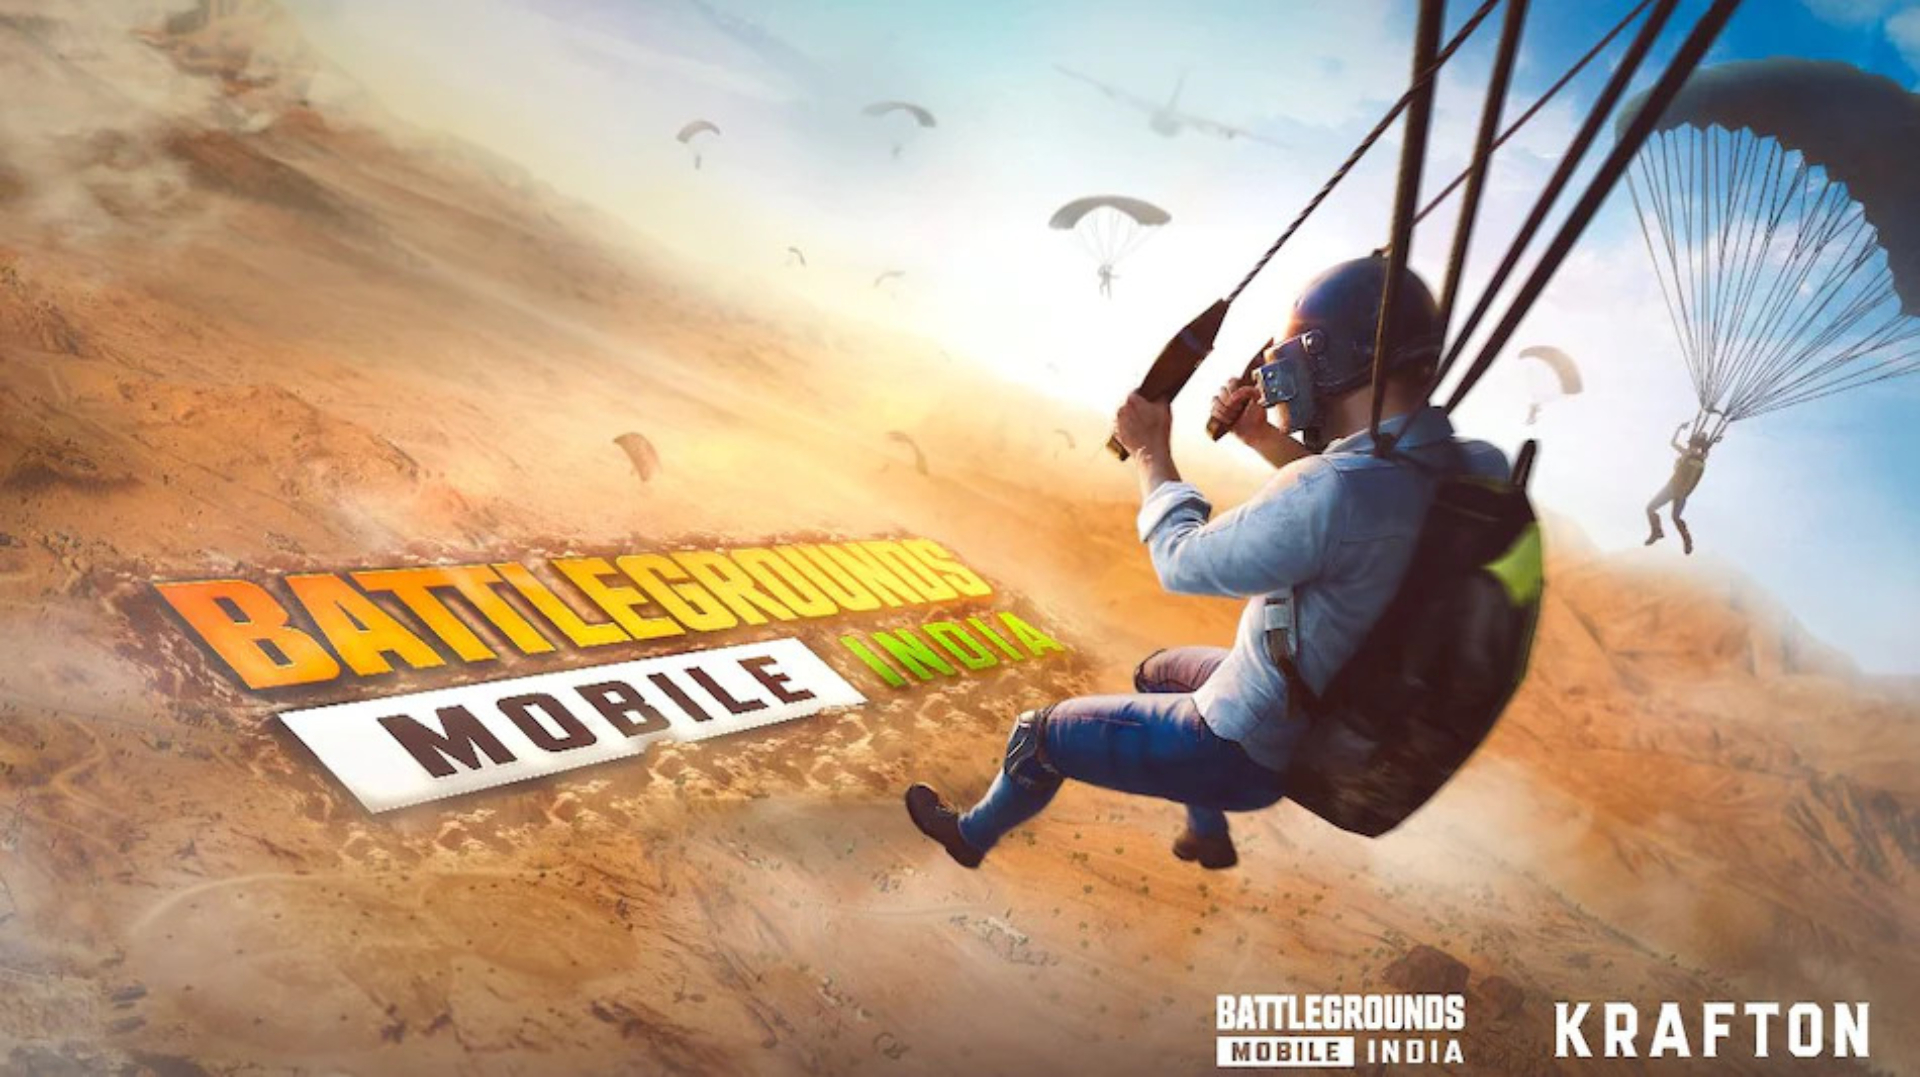 battlegrounds mobile india teaser image krafton